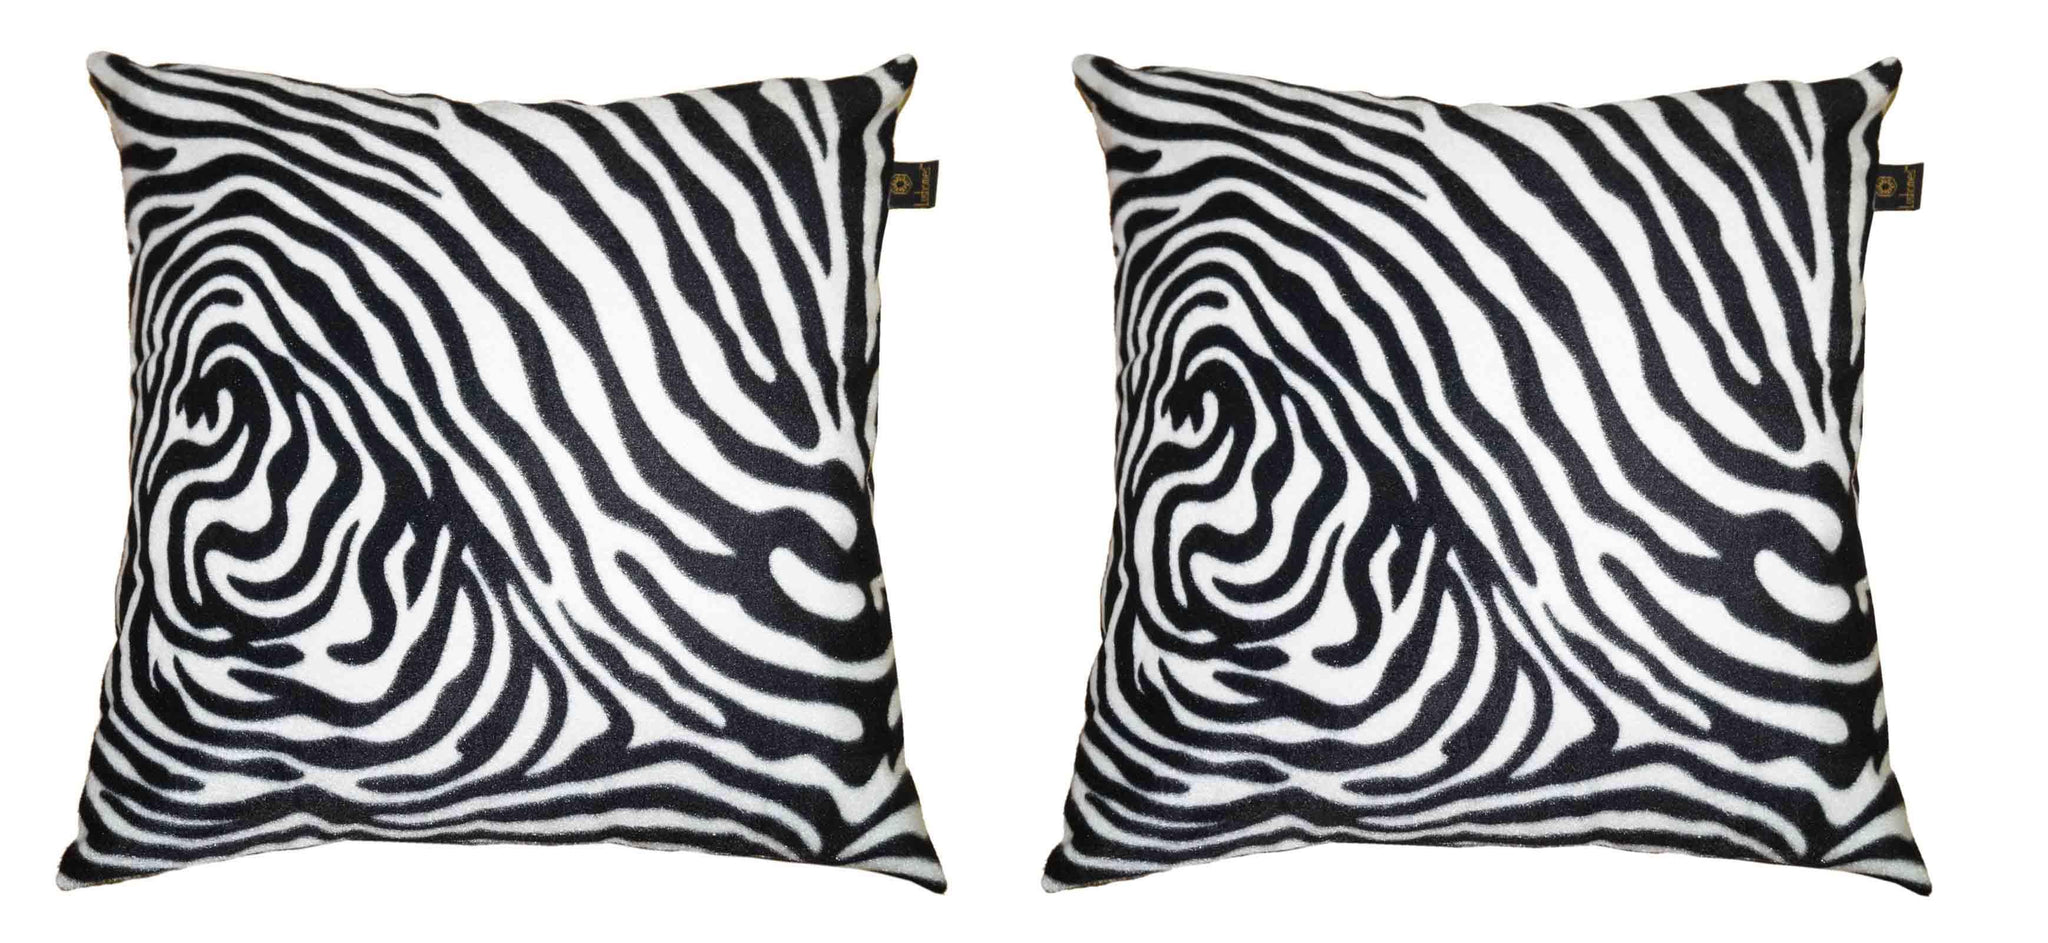 Lushomes White Zebra Skin Printed Cushion Covers (Pack of 2) - Lushomes